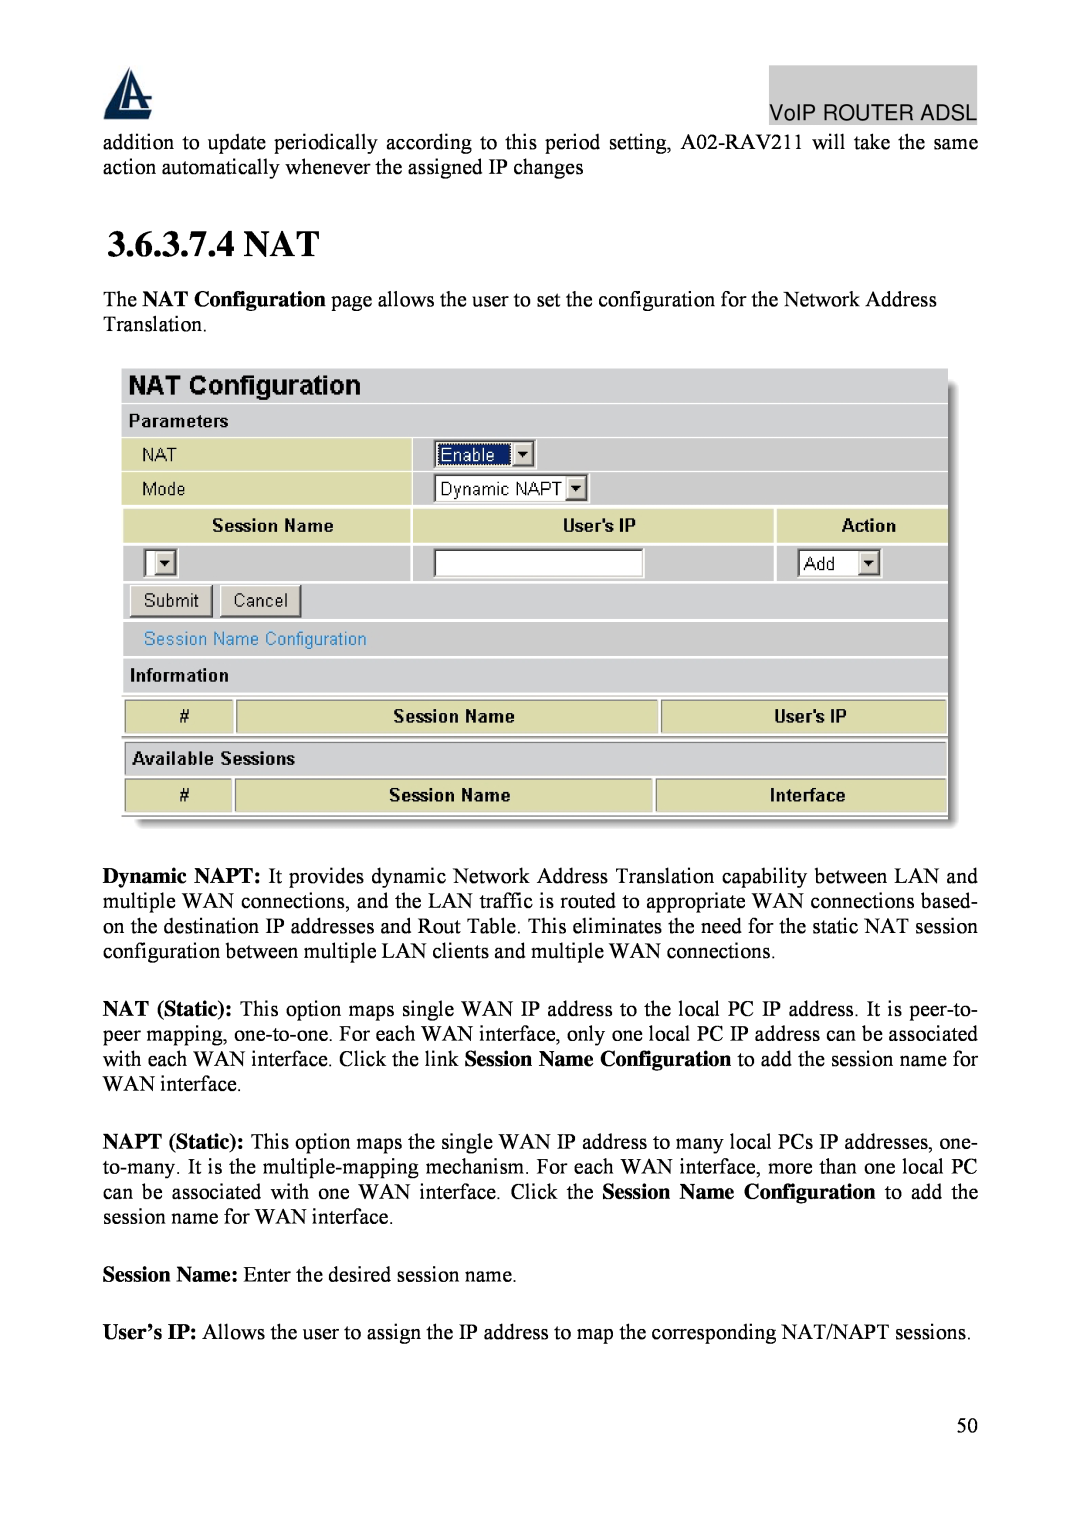 Atlantis Land A02-RAV211 manual 3.6.3.7.4 NAT 